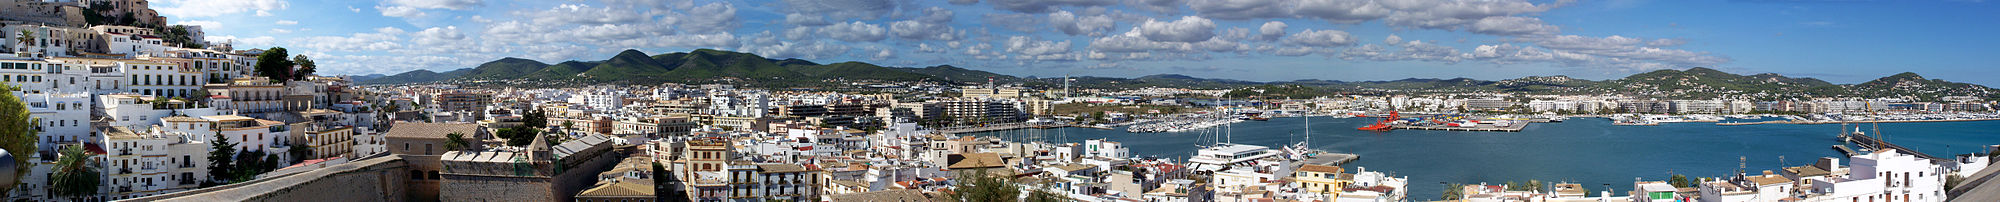 Panoramabild Eivissas: Links die Altstadt Dalt Vila, rechts der Hafen